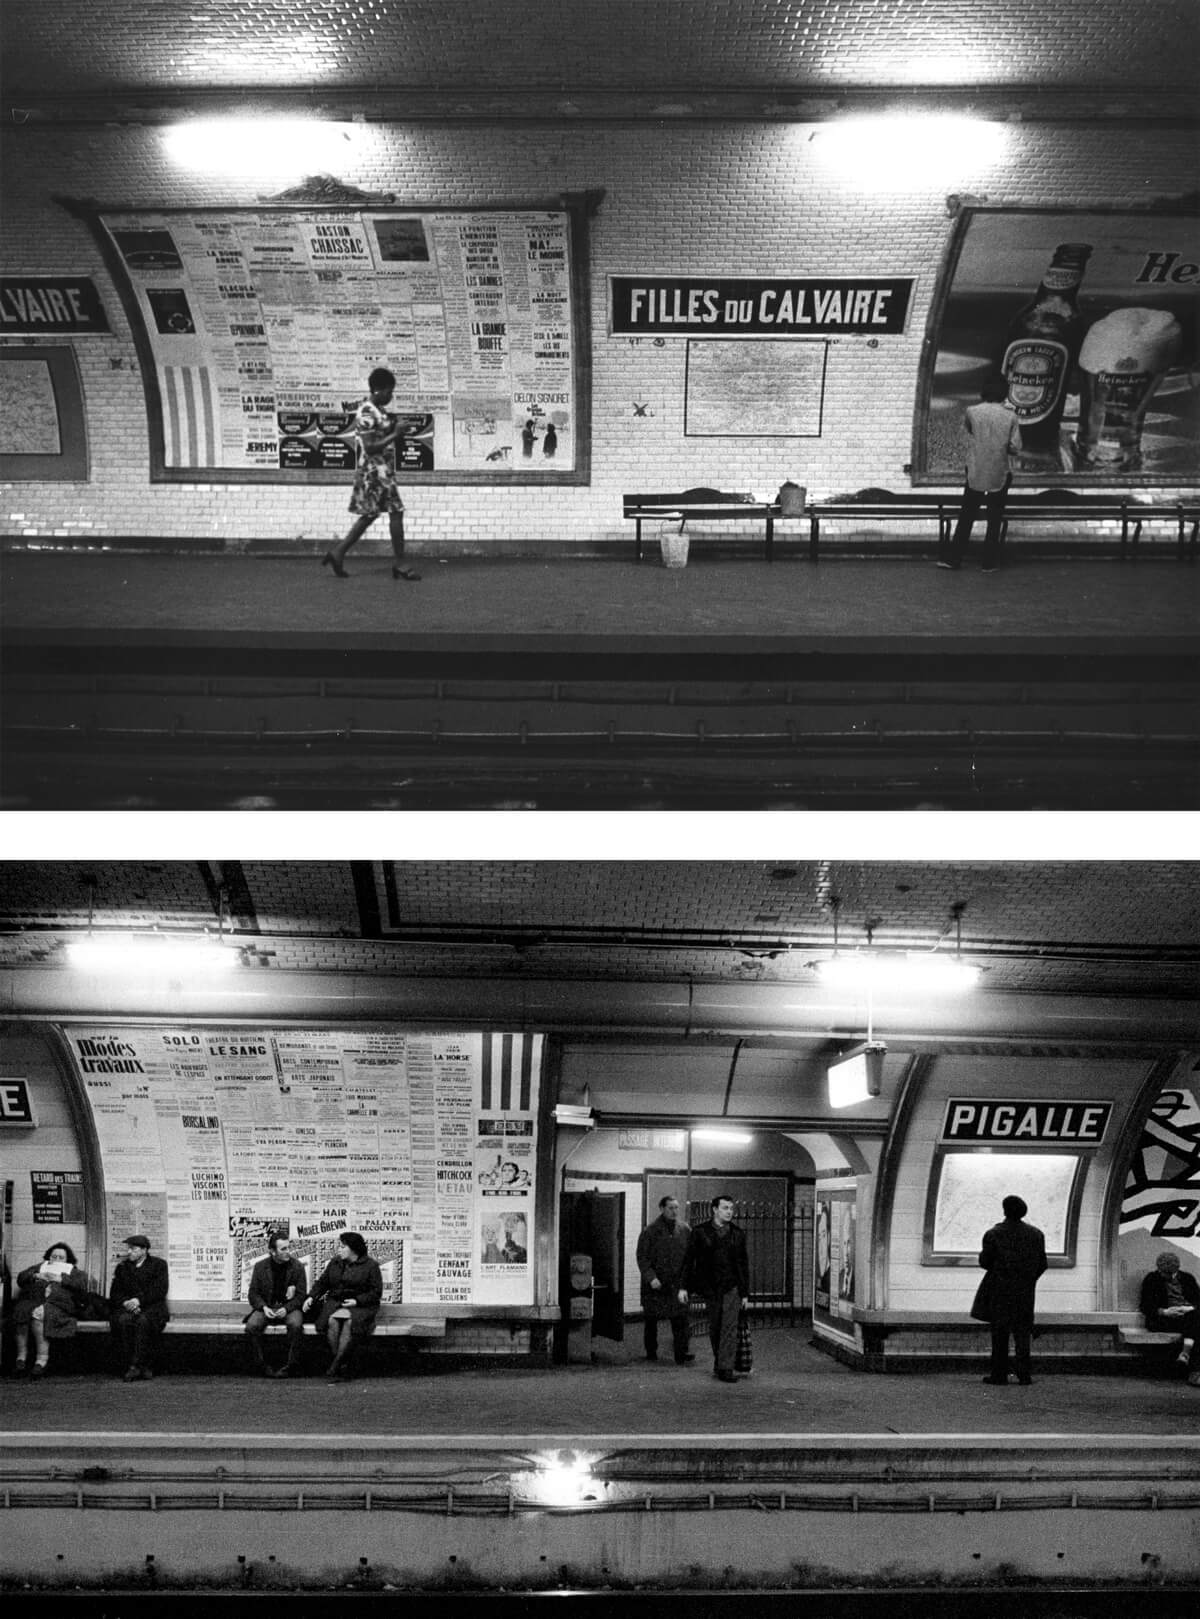 Two photographs of works by artist Daniel Buren from his nineteen seventy series “Photo-souvenir: 140 stations du métro parisien.”